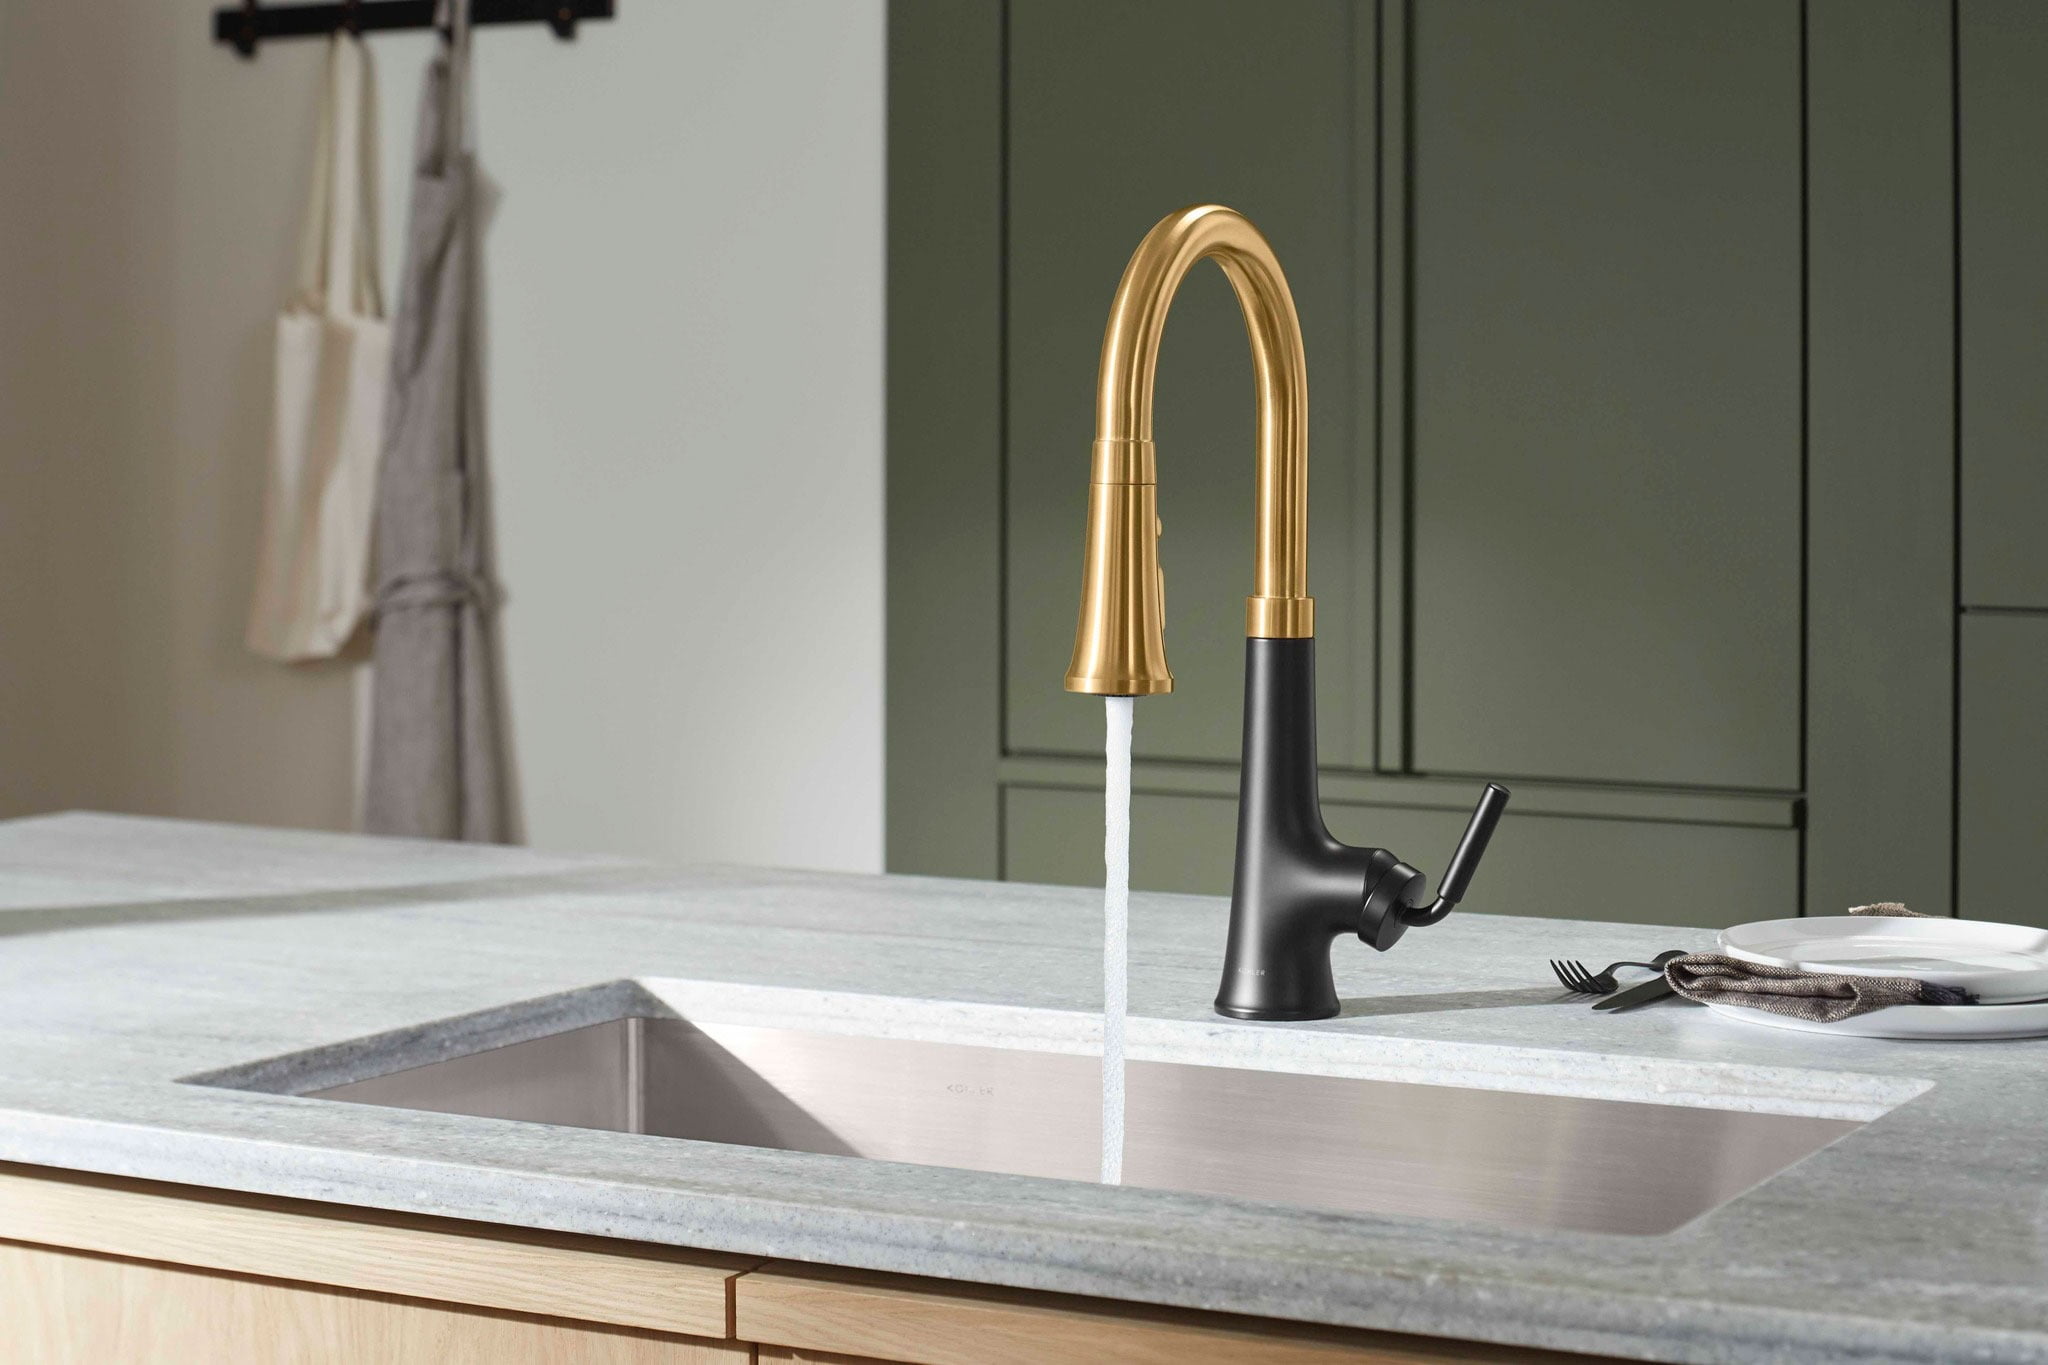 Kitchen sink, Plumbing fixture, Metal, Arch, Cabinetry, Tap, Countertop, Room, Property